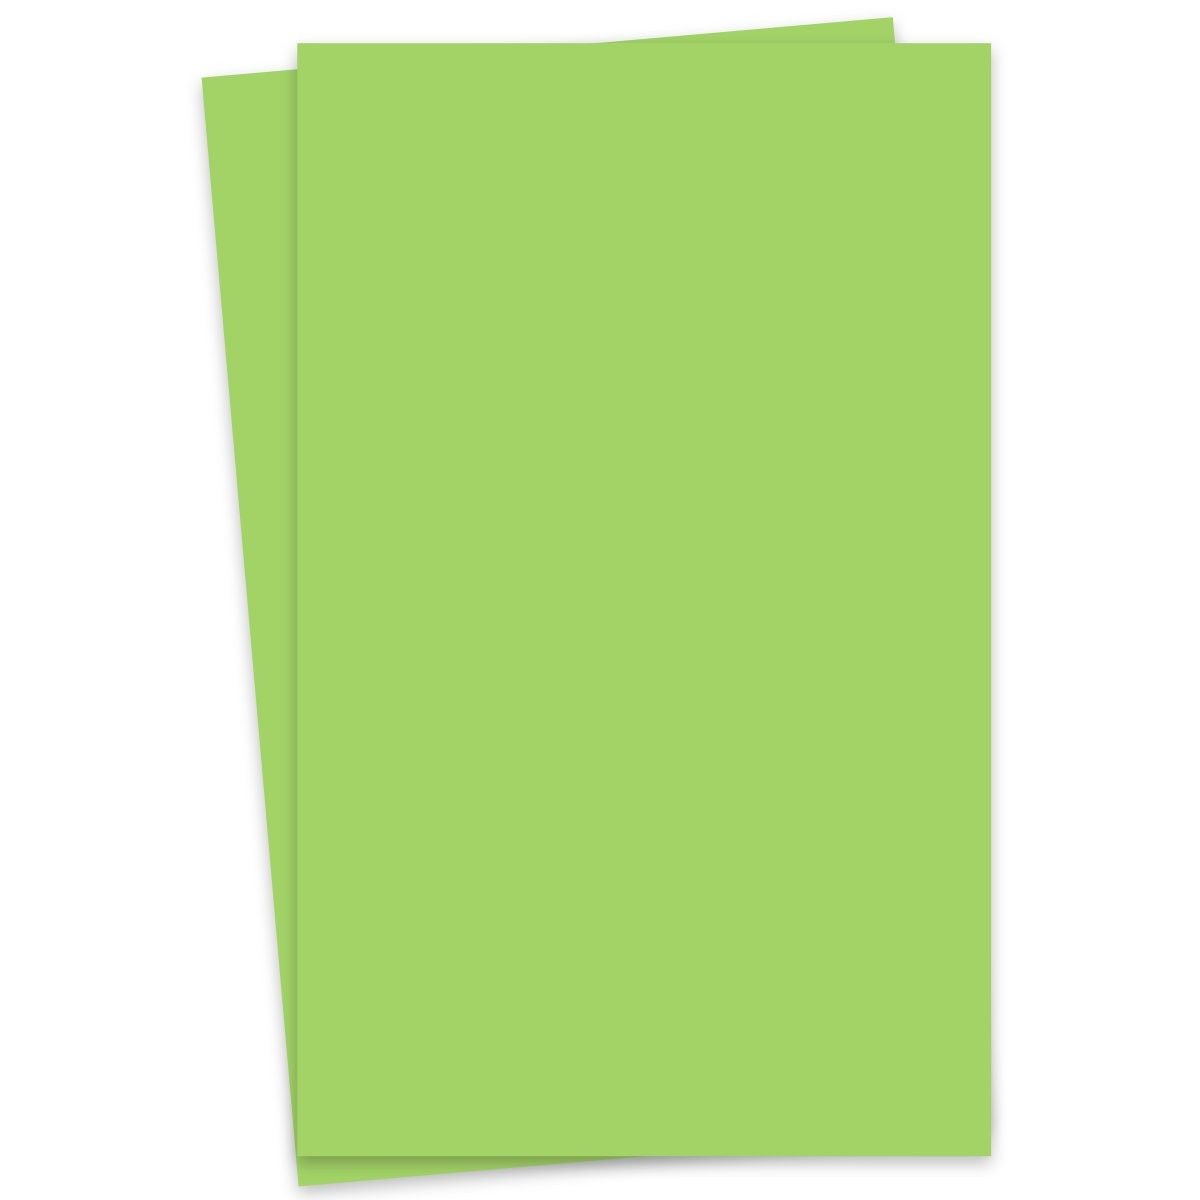 Burano Spring Green (60) - 8.5X11 Cardstock Paper - 92Lb Cover (250Gsm) -  100 Pk